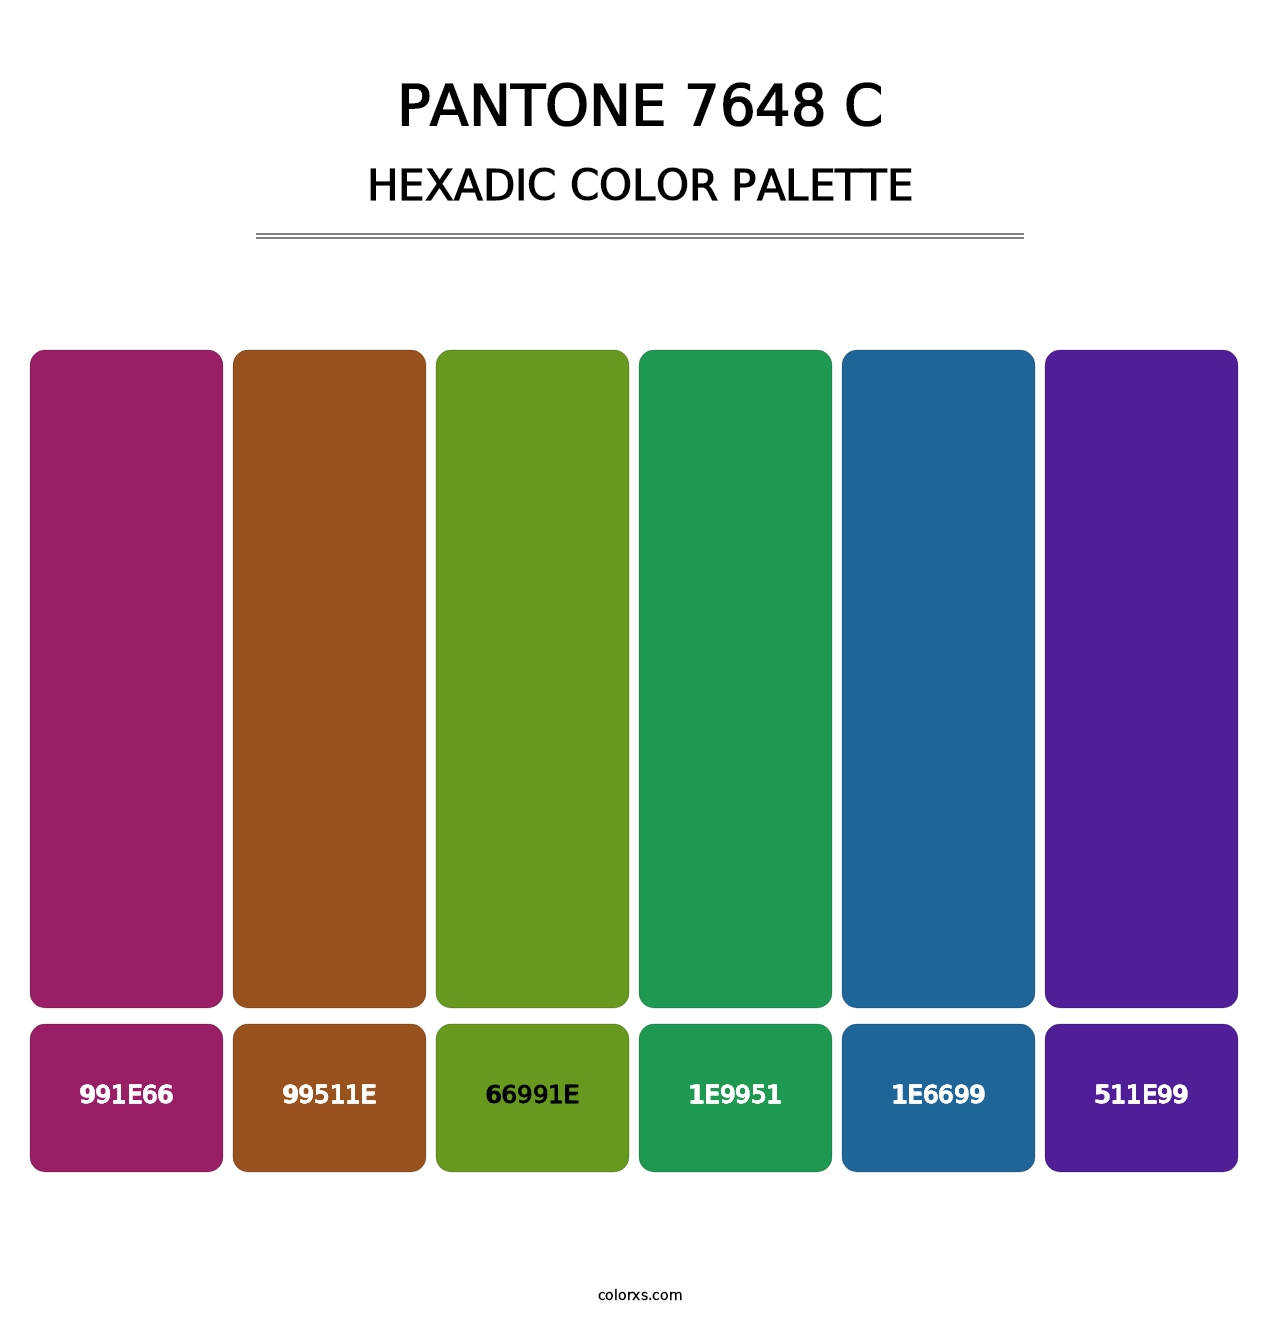 PANTONE 7648 C - Hexadic Color Palette